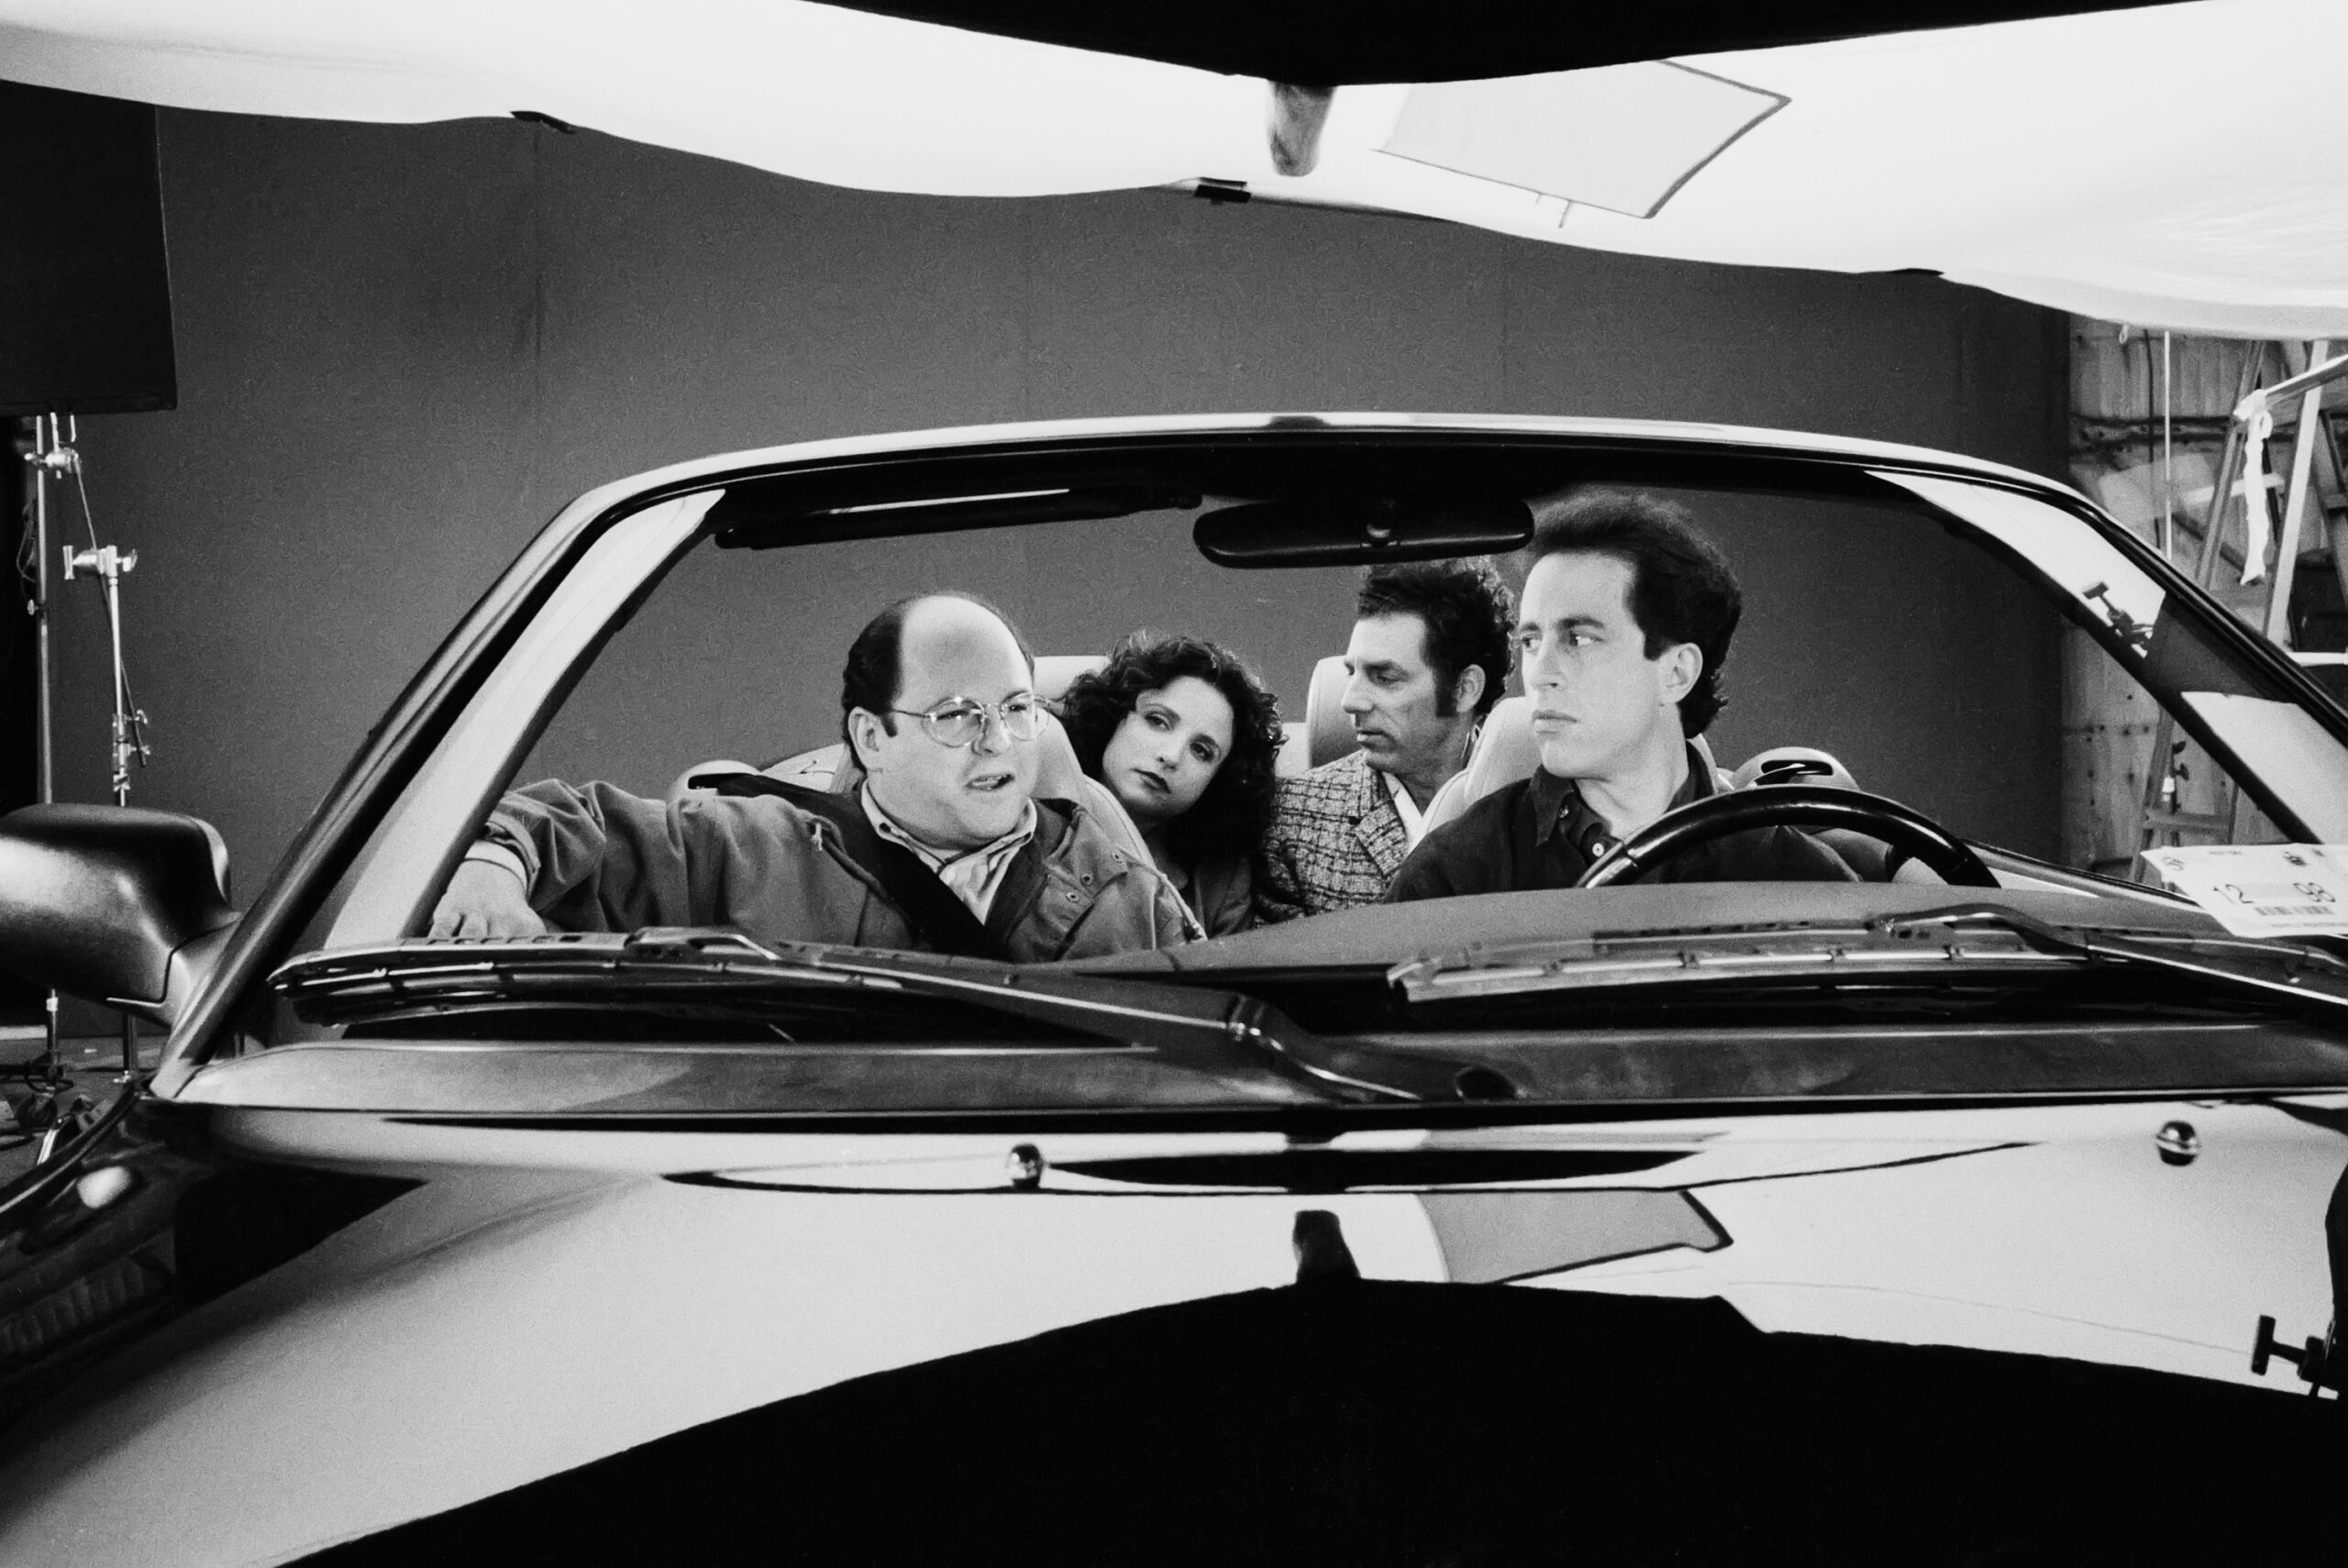 STUDIO CITY, CA - APRIL 3: (L-R) Actors Jason Alexander, Julia Louis-Dreyfus, Michael Richards, and Jerry Seinfeld on set in the final days of shooting the hit tv show 